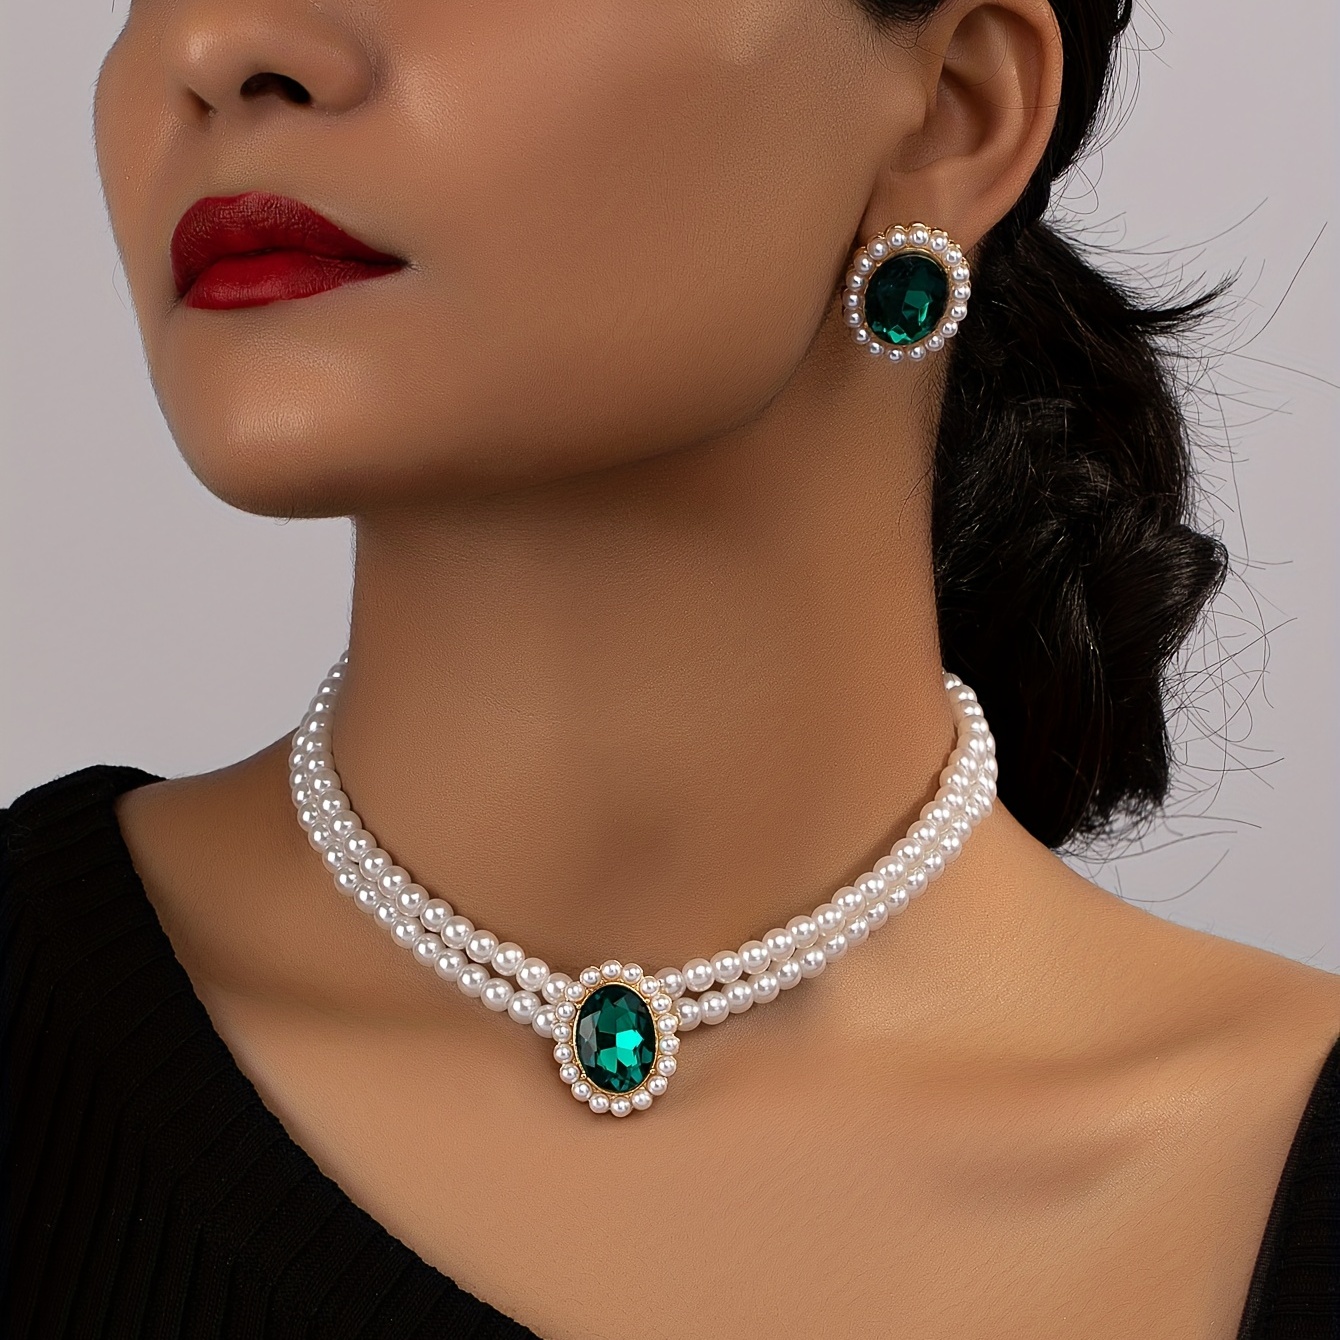 

Vintage Luxury Emerald Stud Earrings & Faux Pearl Choker Necklace Set, Bridal Wedding Accessory